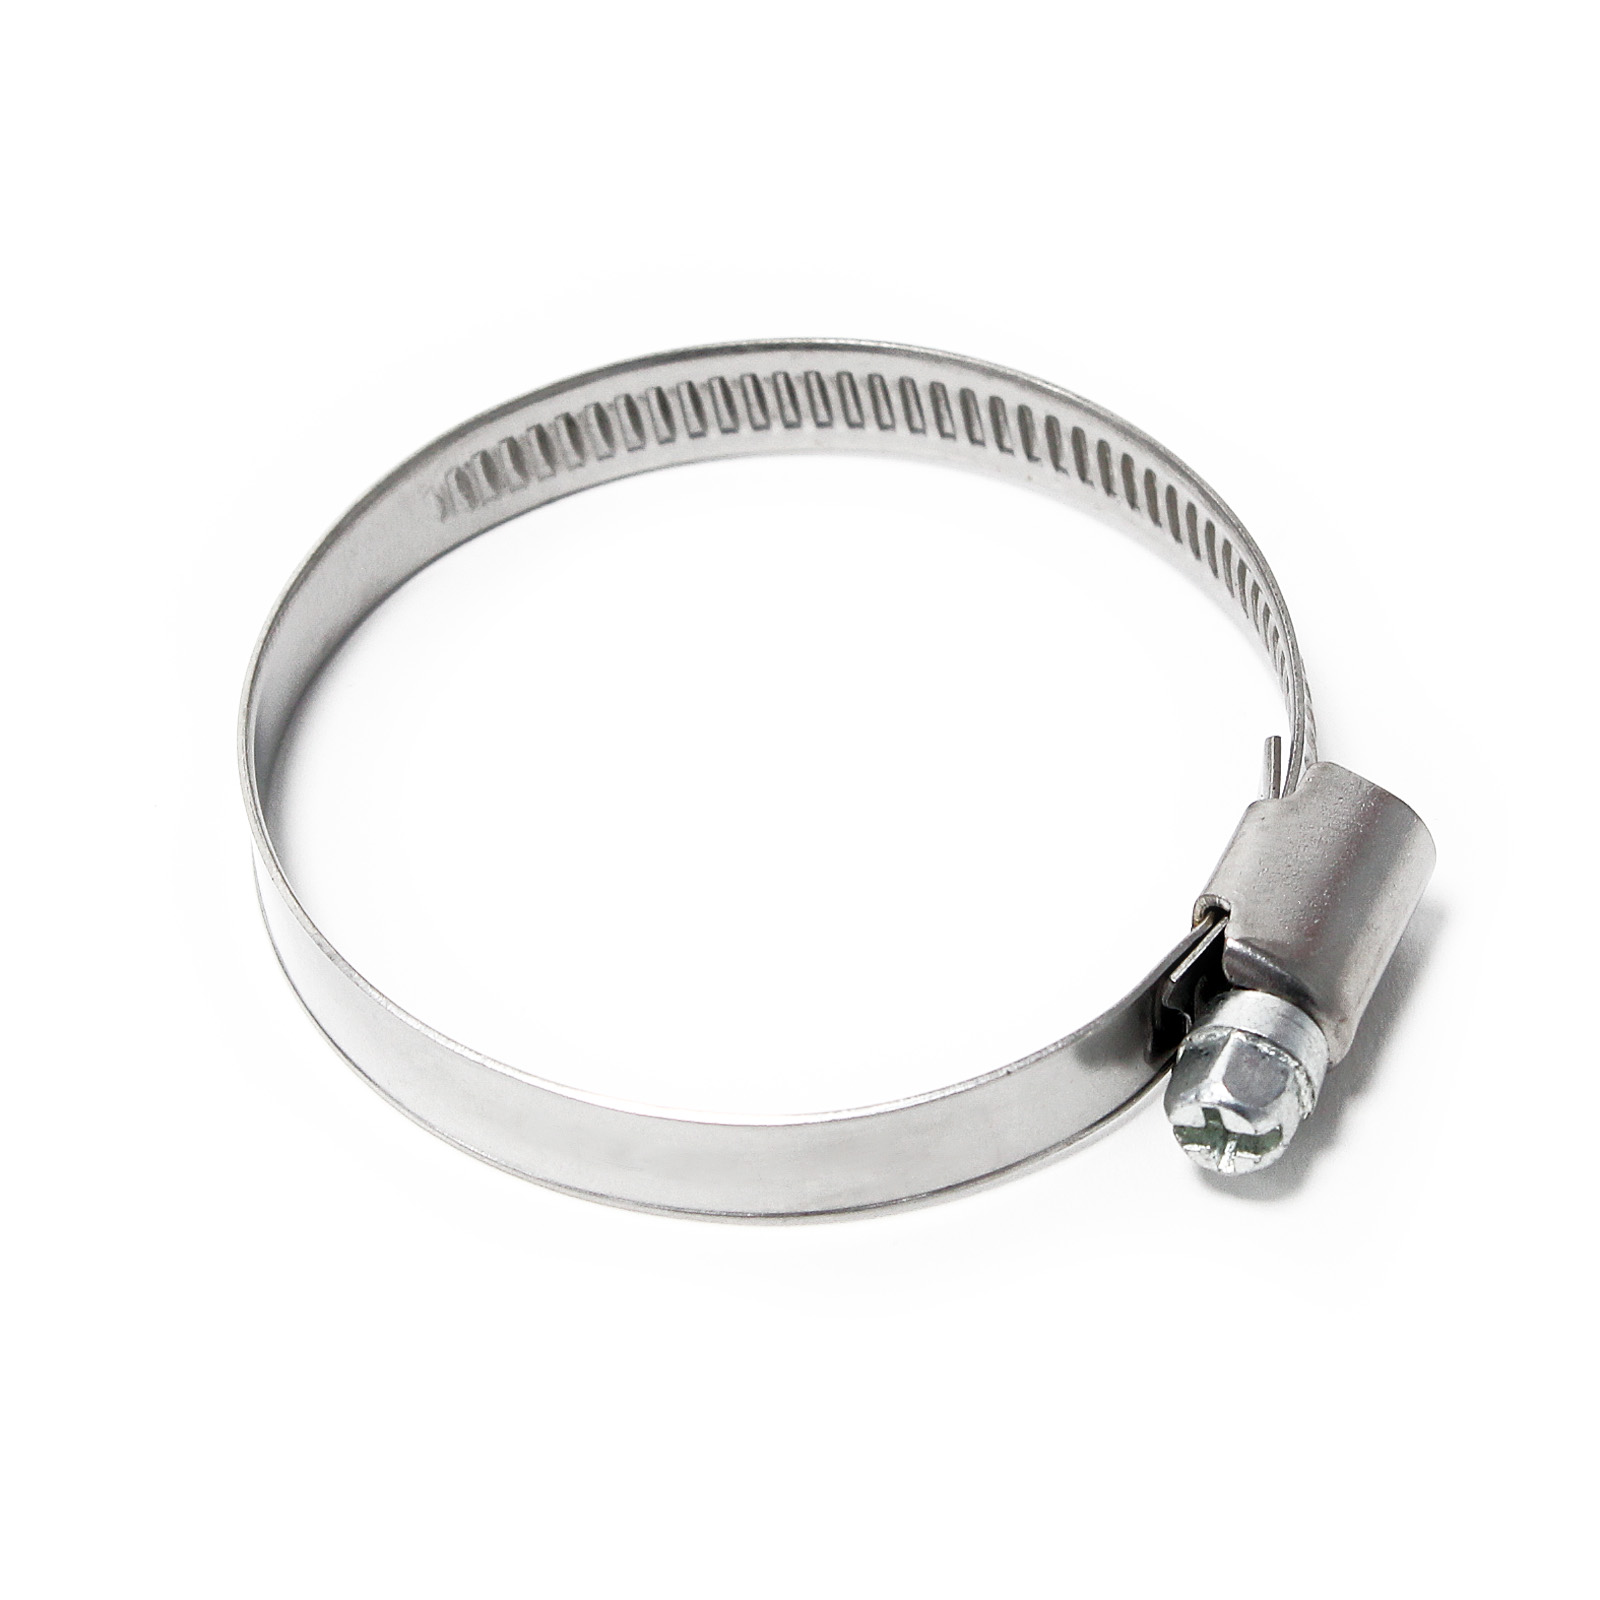 La crémaillère collier de serrage W4 inox 9mm 25-40mm